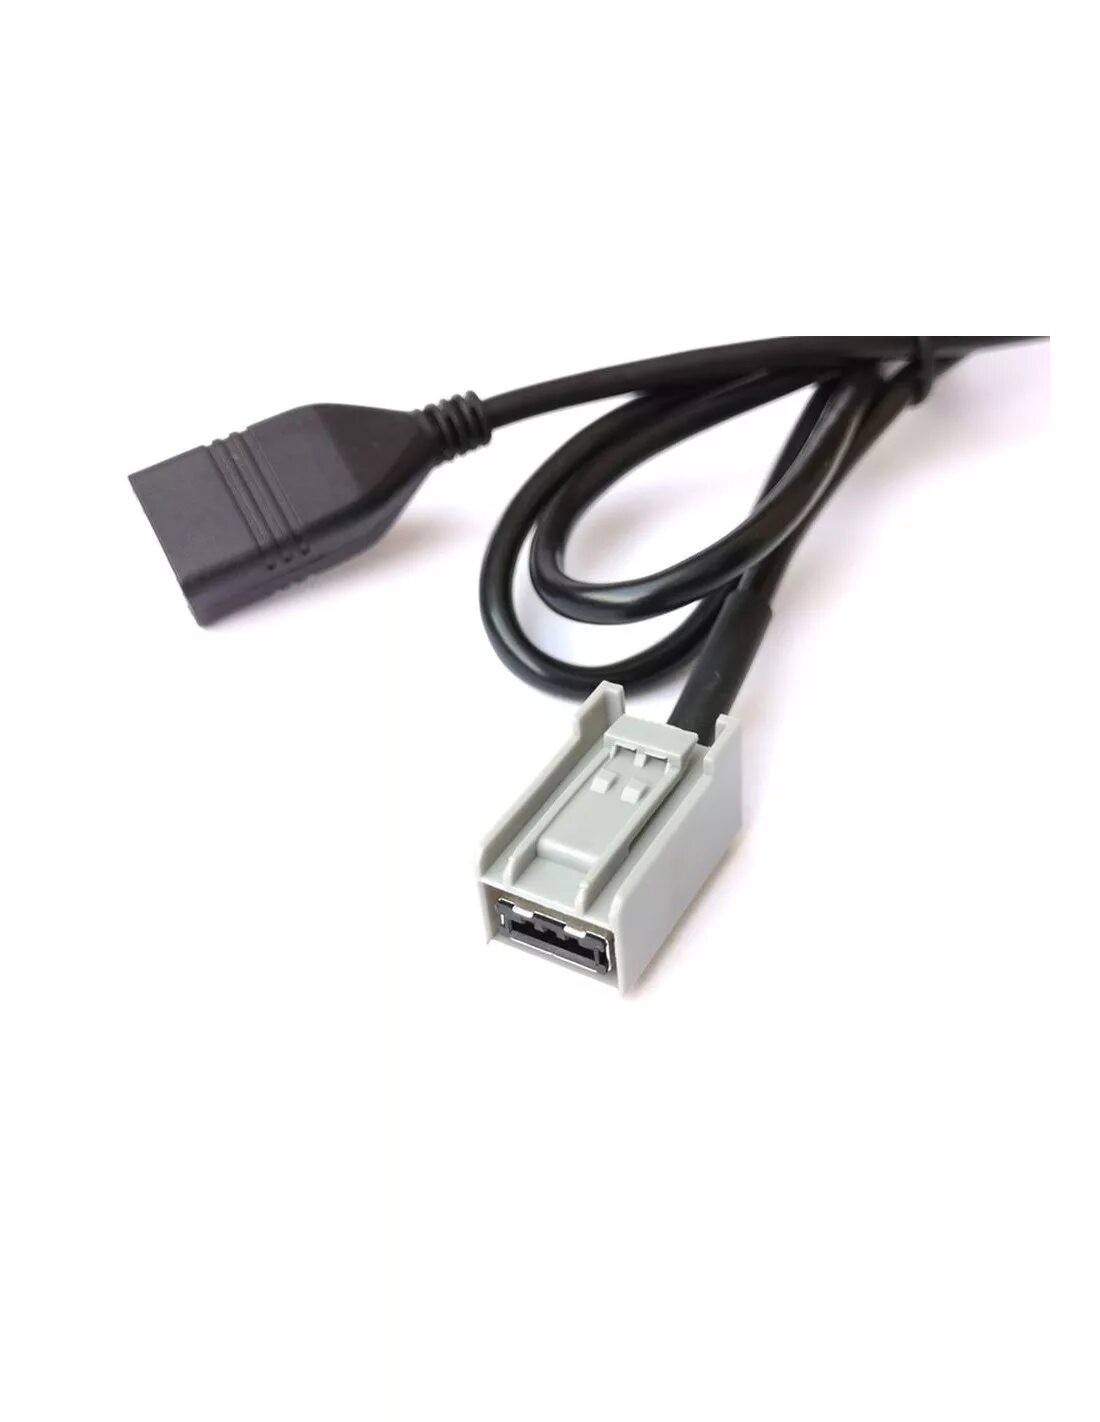 Usb автомагнитолы купить. USB переходник для магнитолы Mitsubishi ASX. Mitsubishi Outlander 3 кабель USB. USB кабель для Митсубиси ASX. Кабель USB адаптер aux Mitsubishi Outlander 2016.